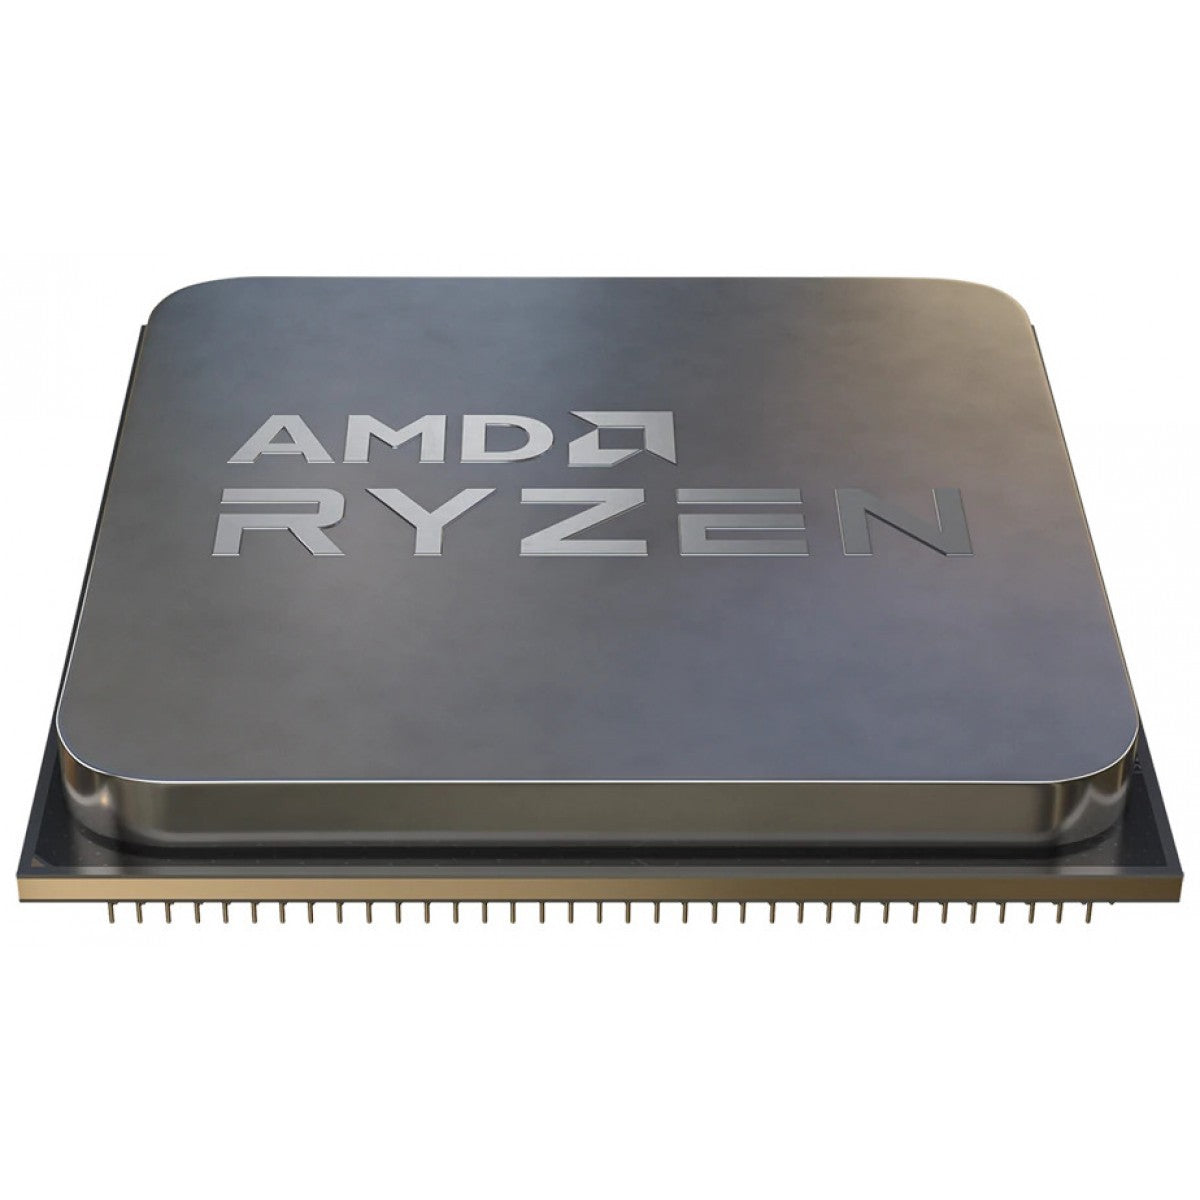 *CONSULTAR VALOR PELO WHATSAPP* Processador AMD Ryzen 7 5700G 3.8GHz (4.6GHz Turbo), 8-Cores 16-Threads, Cooler Wraith Stealth, AM4, Com vídeo integrado, 100-100000263BOX